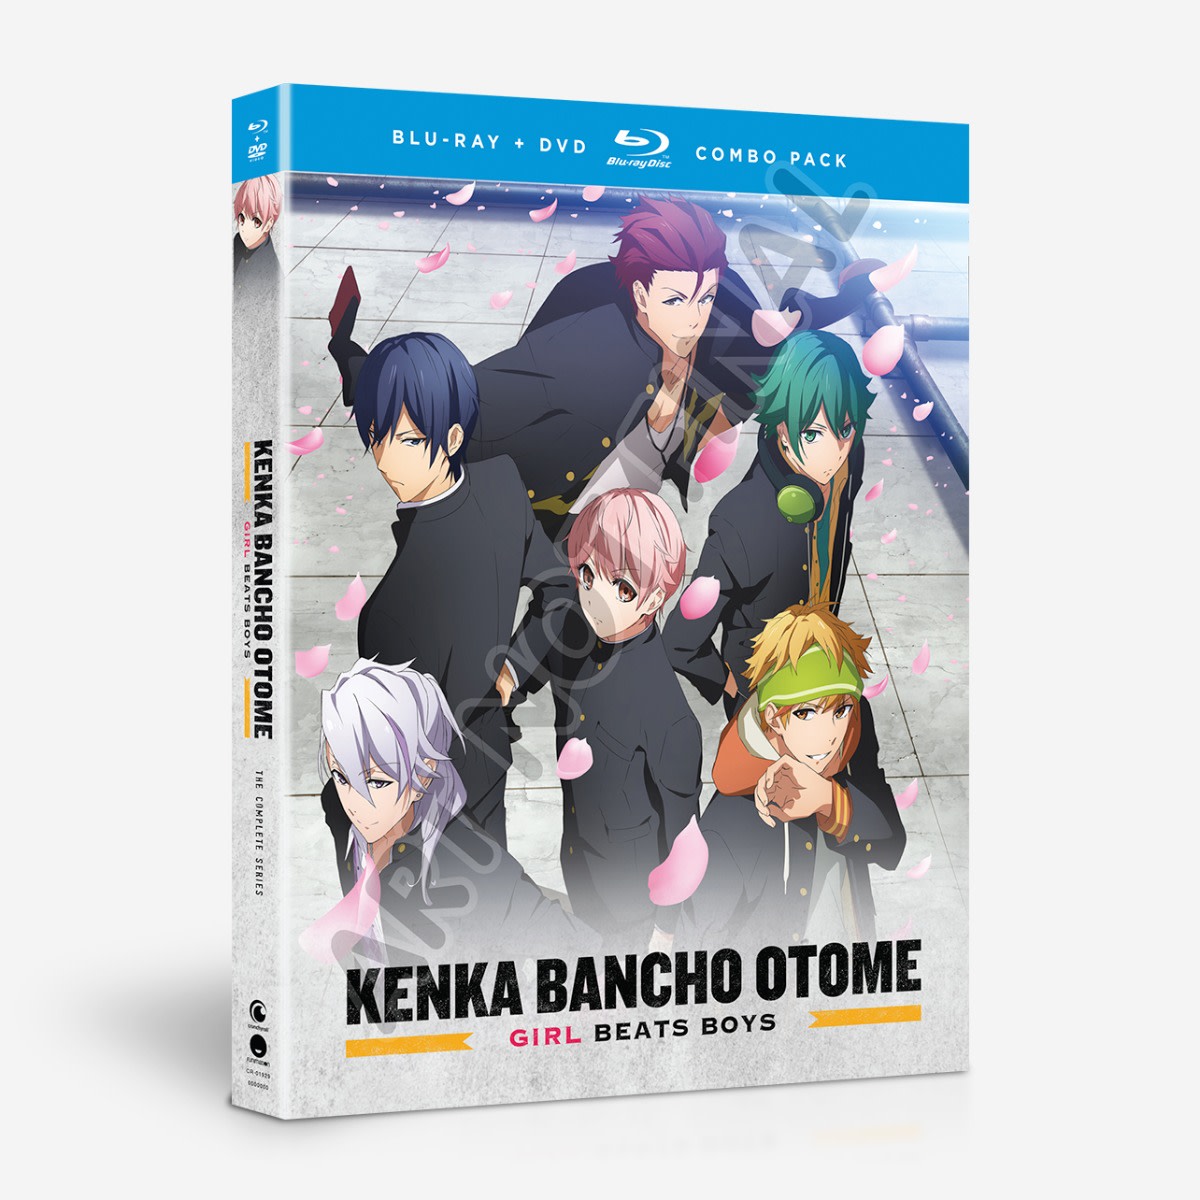 kenka bancho otome english download